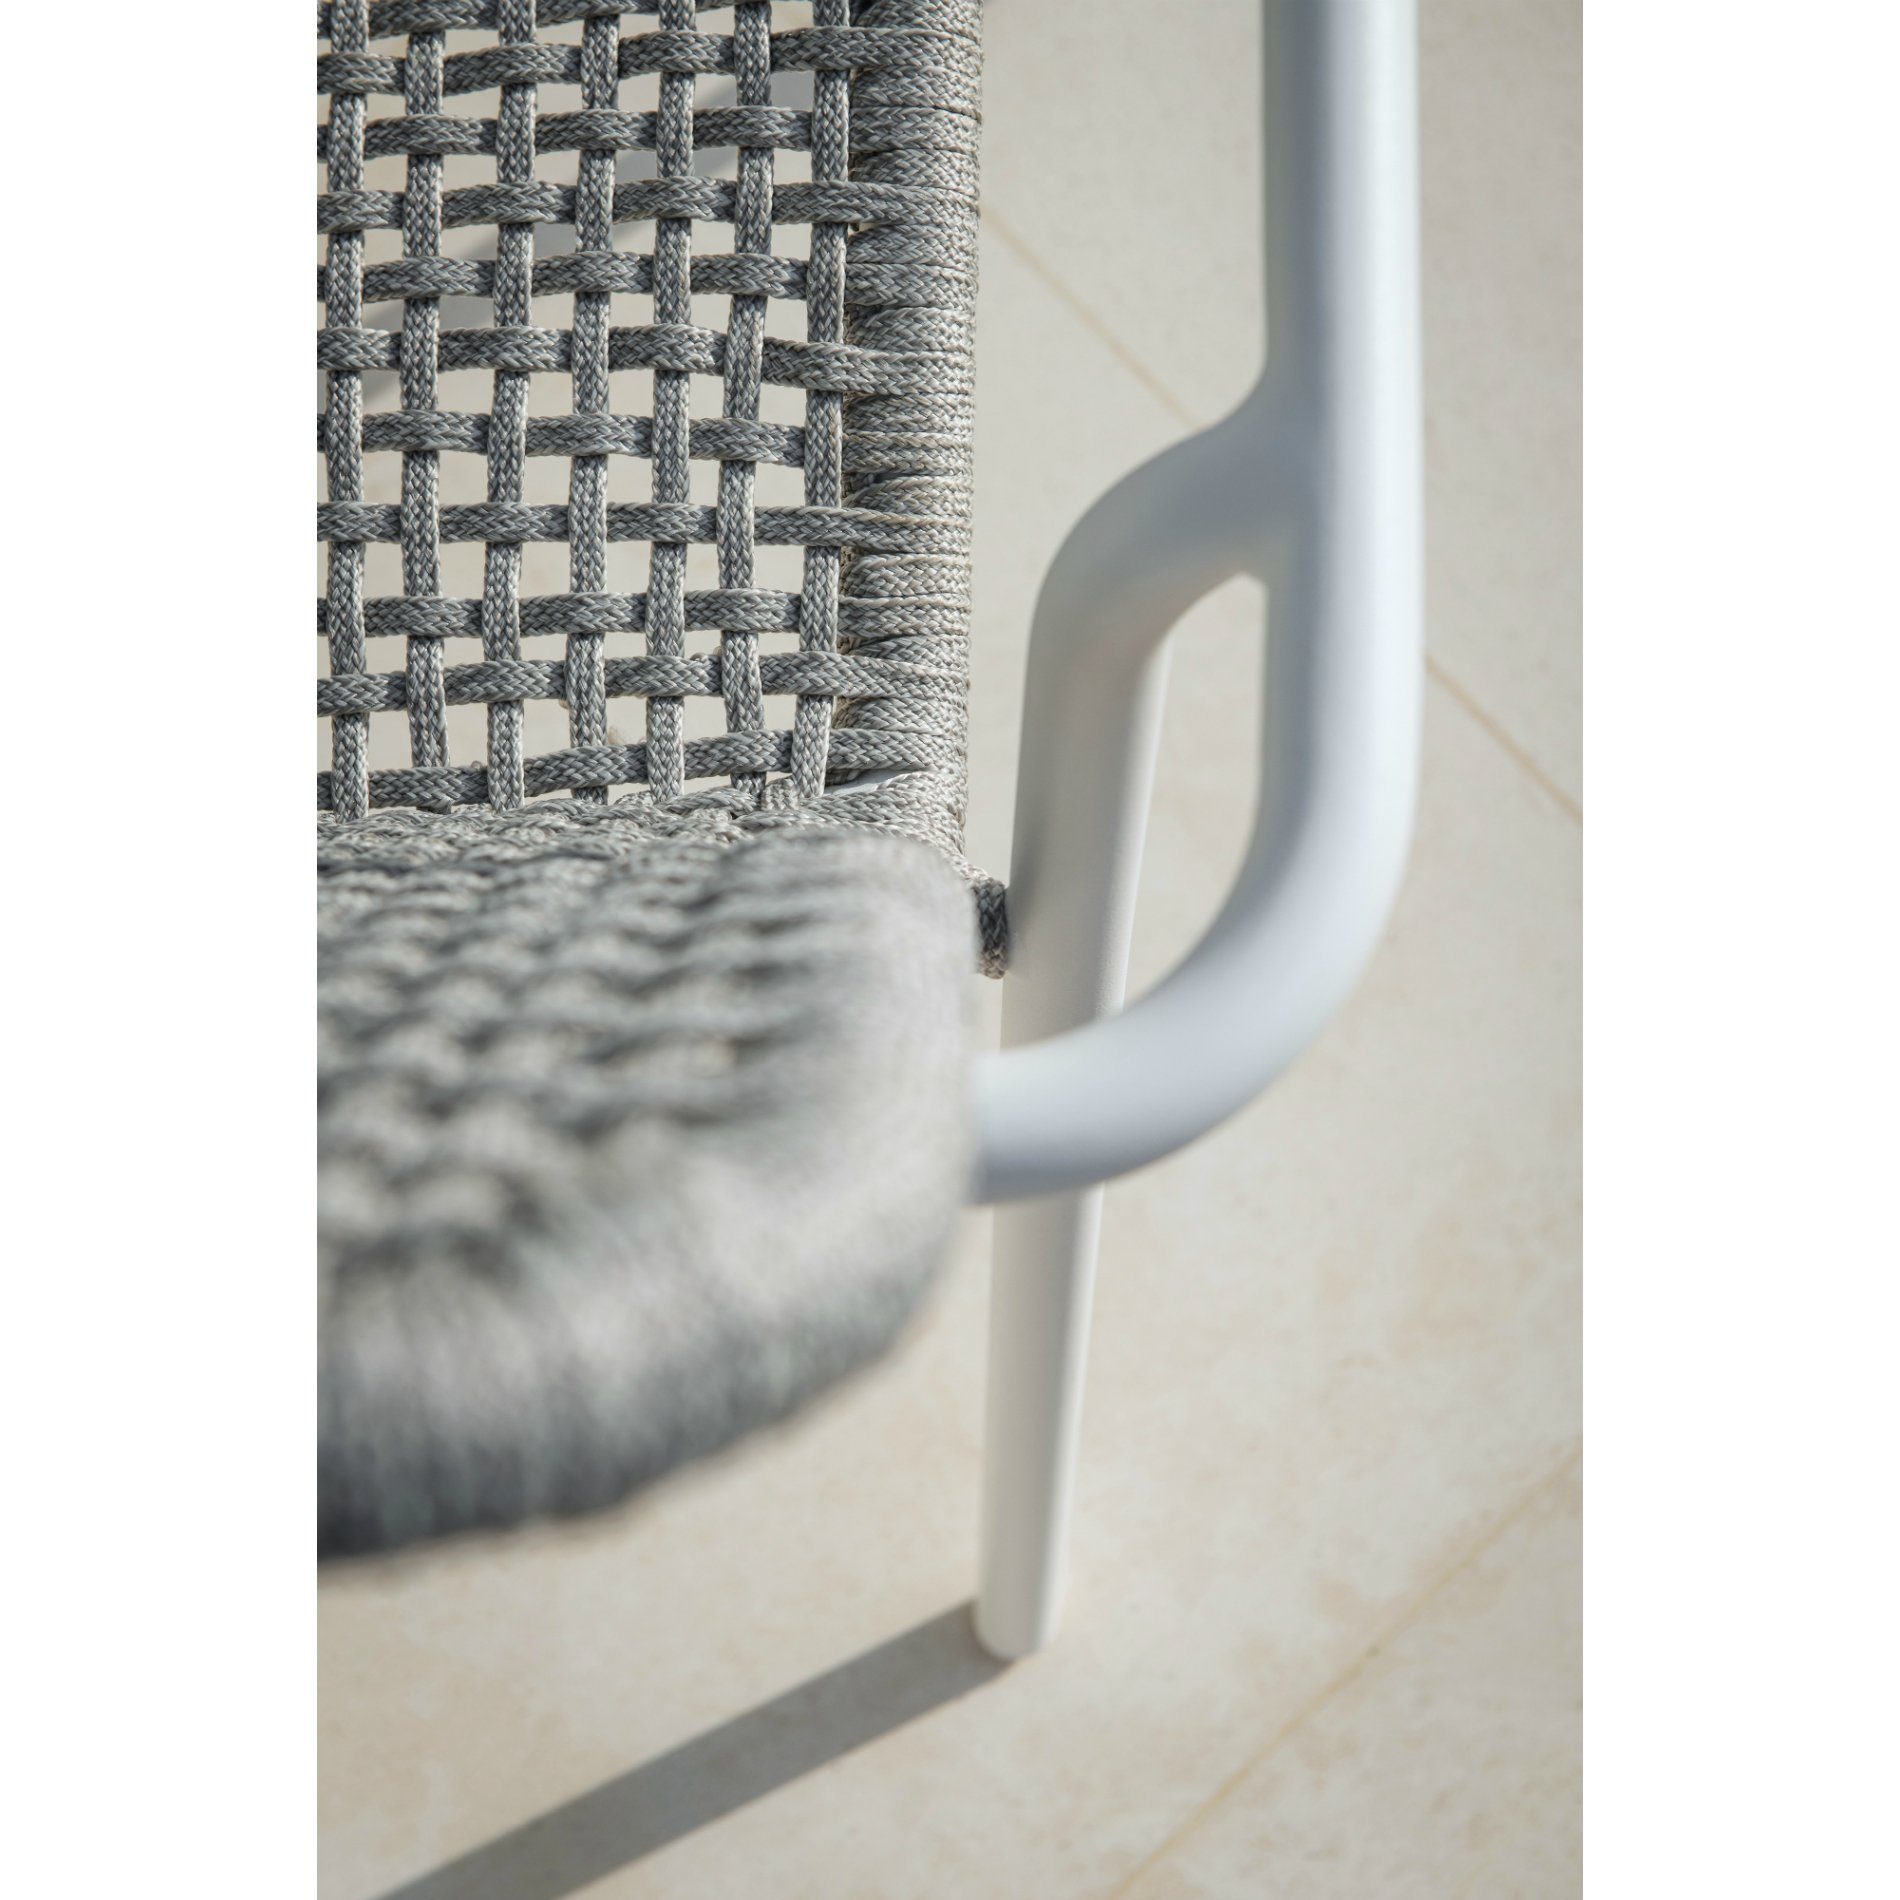 Jati&Kebon Serie "Durham", Aluminium weiß, Bespannung Rope light grey melange